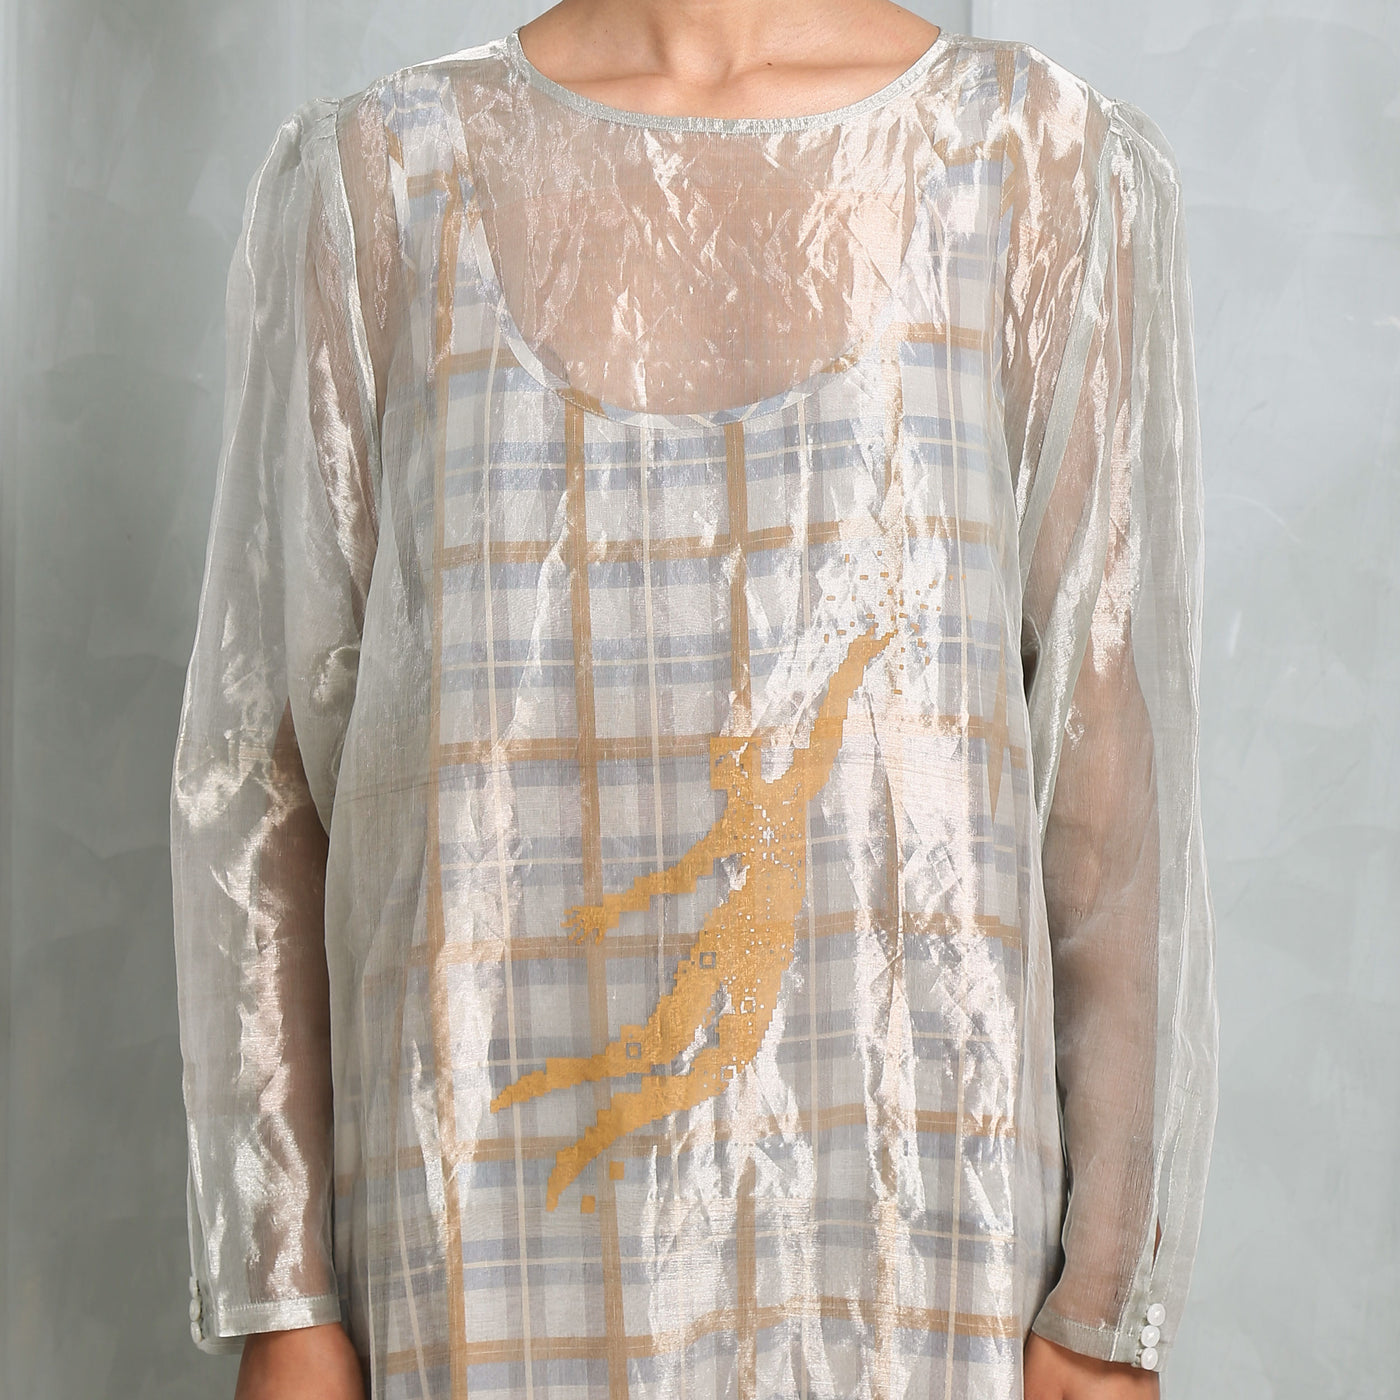 Shikhandi layered midi dress from bhaane with sheer overdress